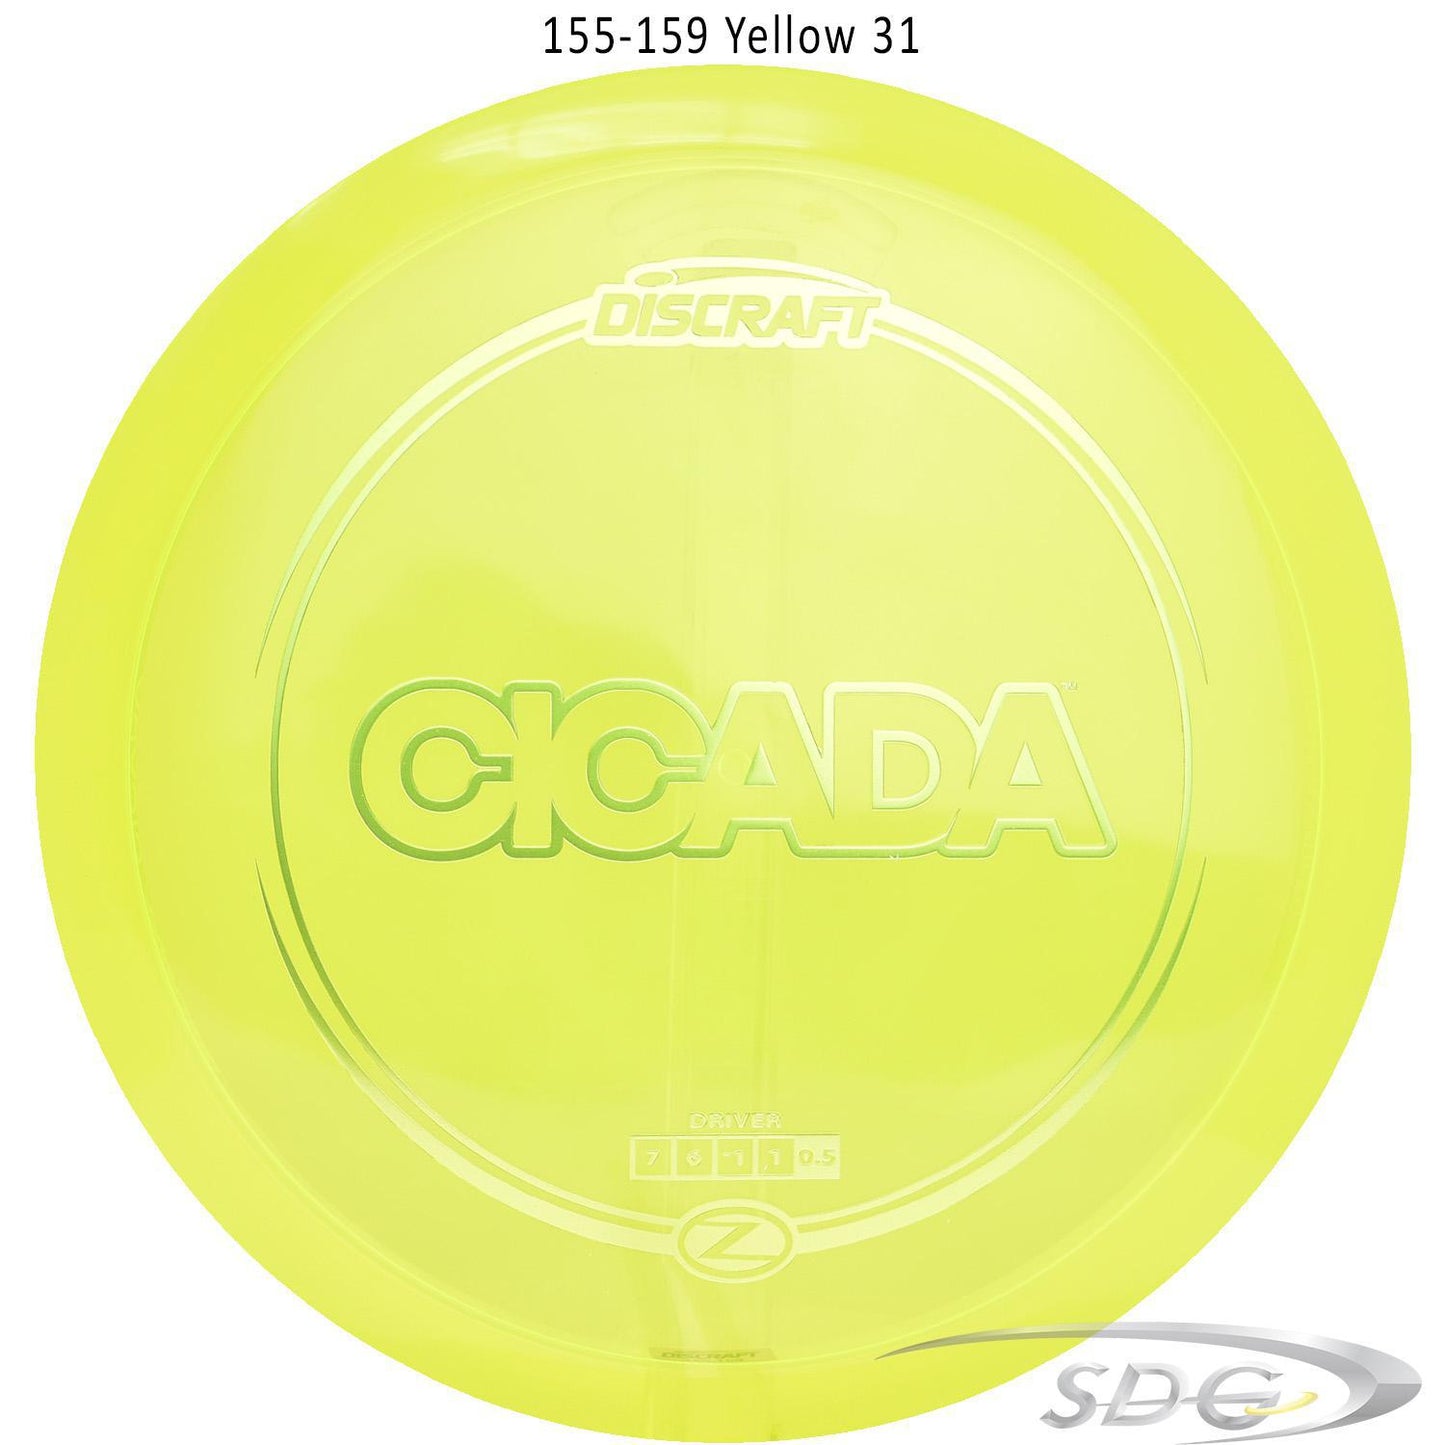 discraft-z-line-cicada-disc-golf-fairway-driver 155-159 Yellow 31 